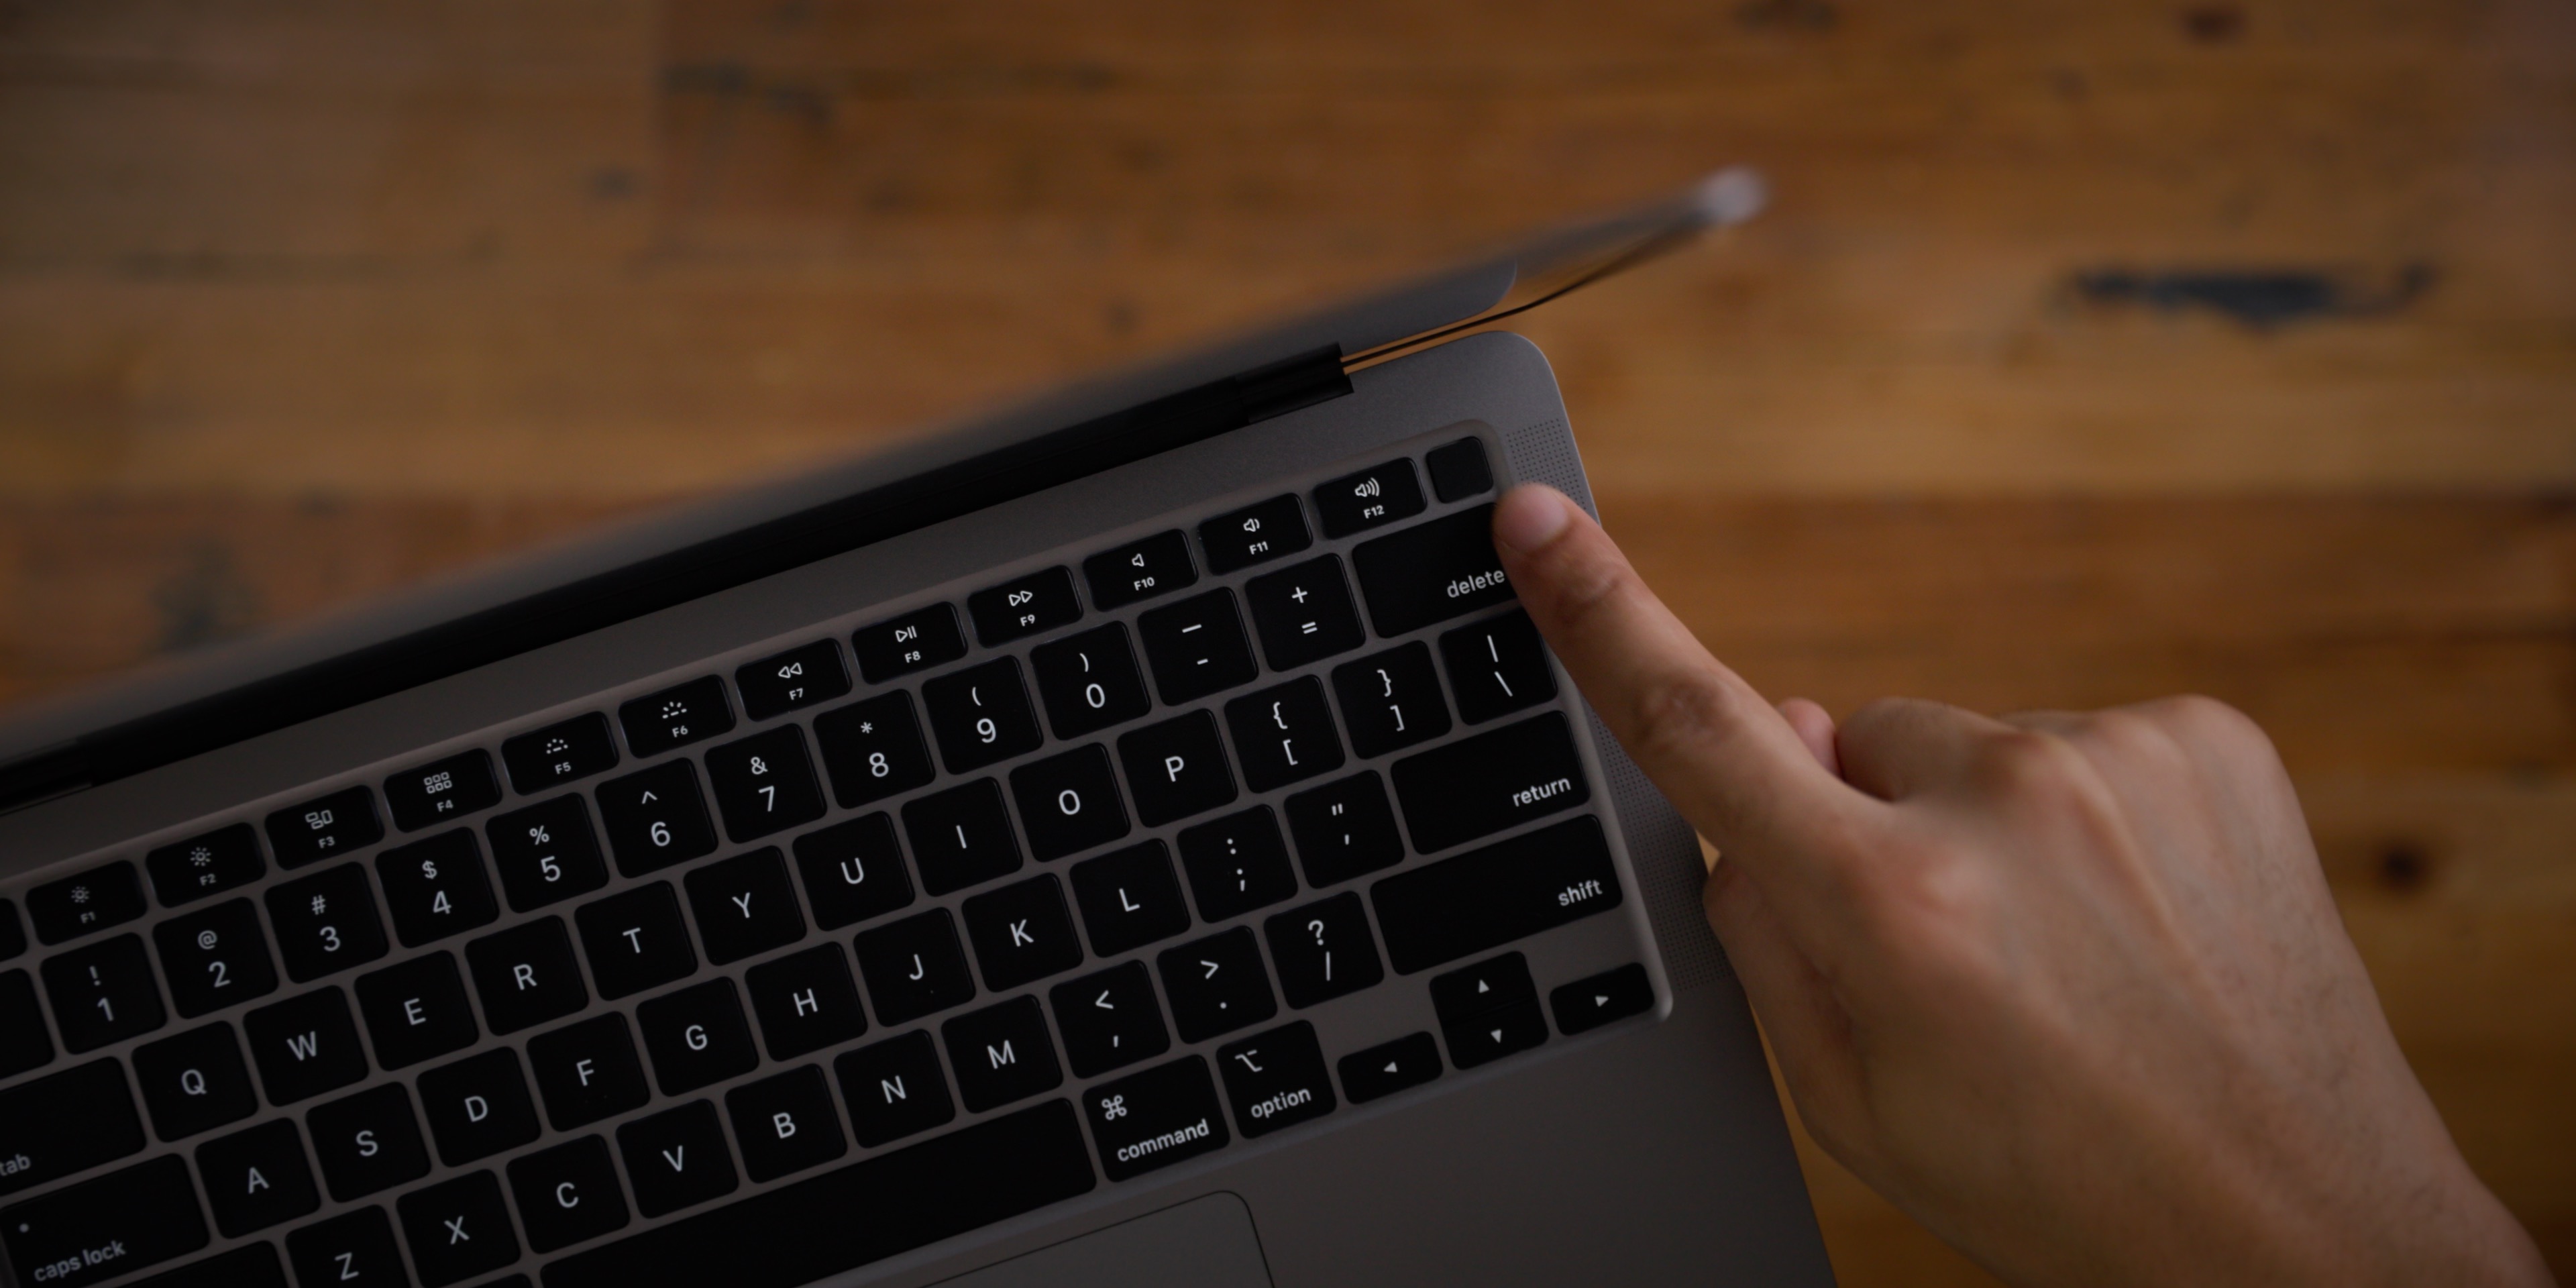 New Mac Magic Keyboard: What we'd like to see - Touch ID